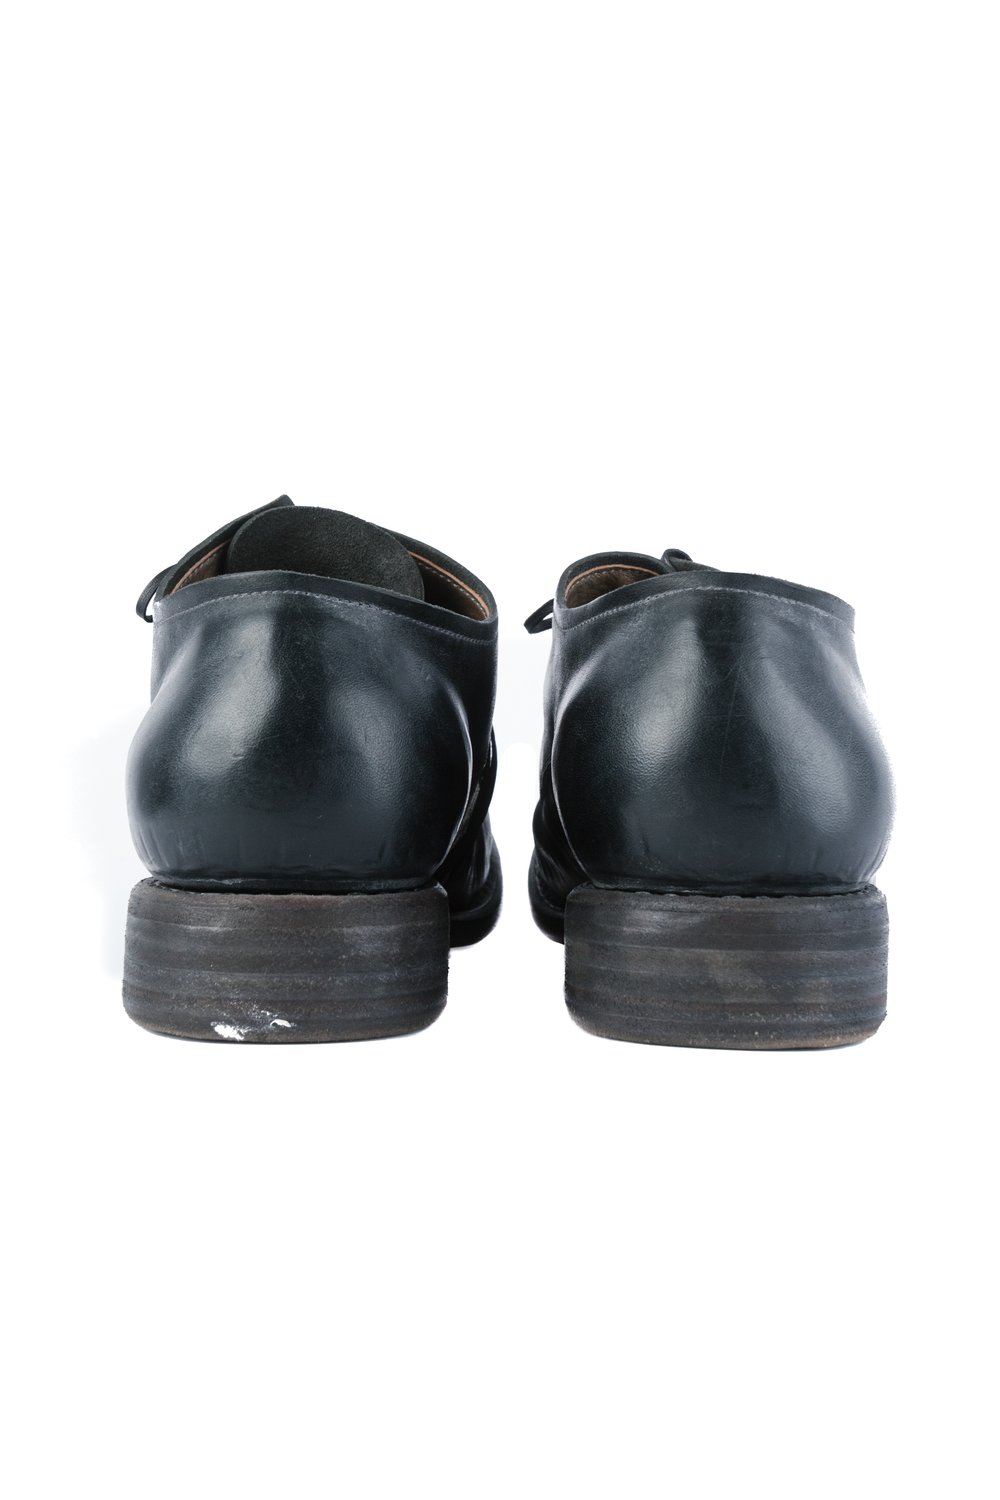 hide-m  LAYER-0 Men Classic Derby Shoe 1.5 H7 GY, black horse leather